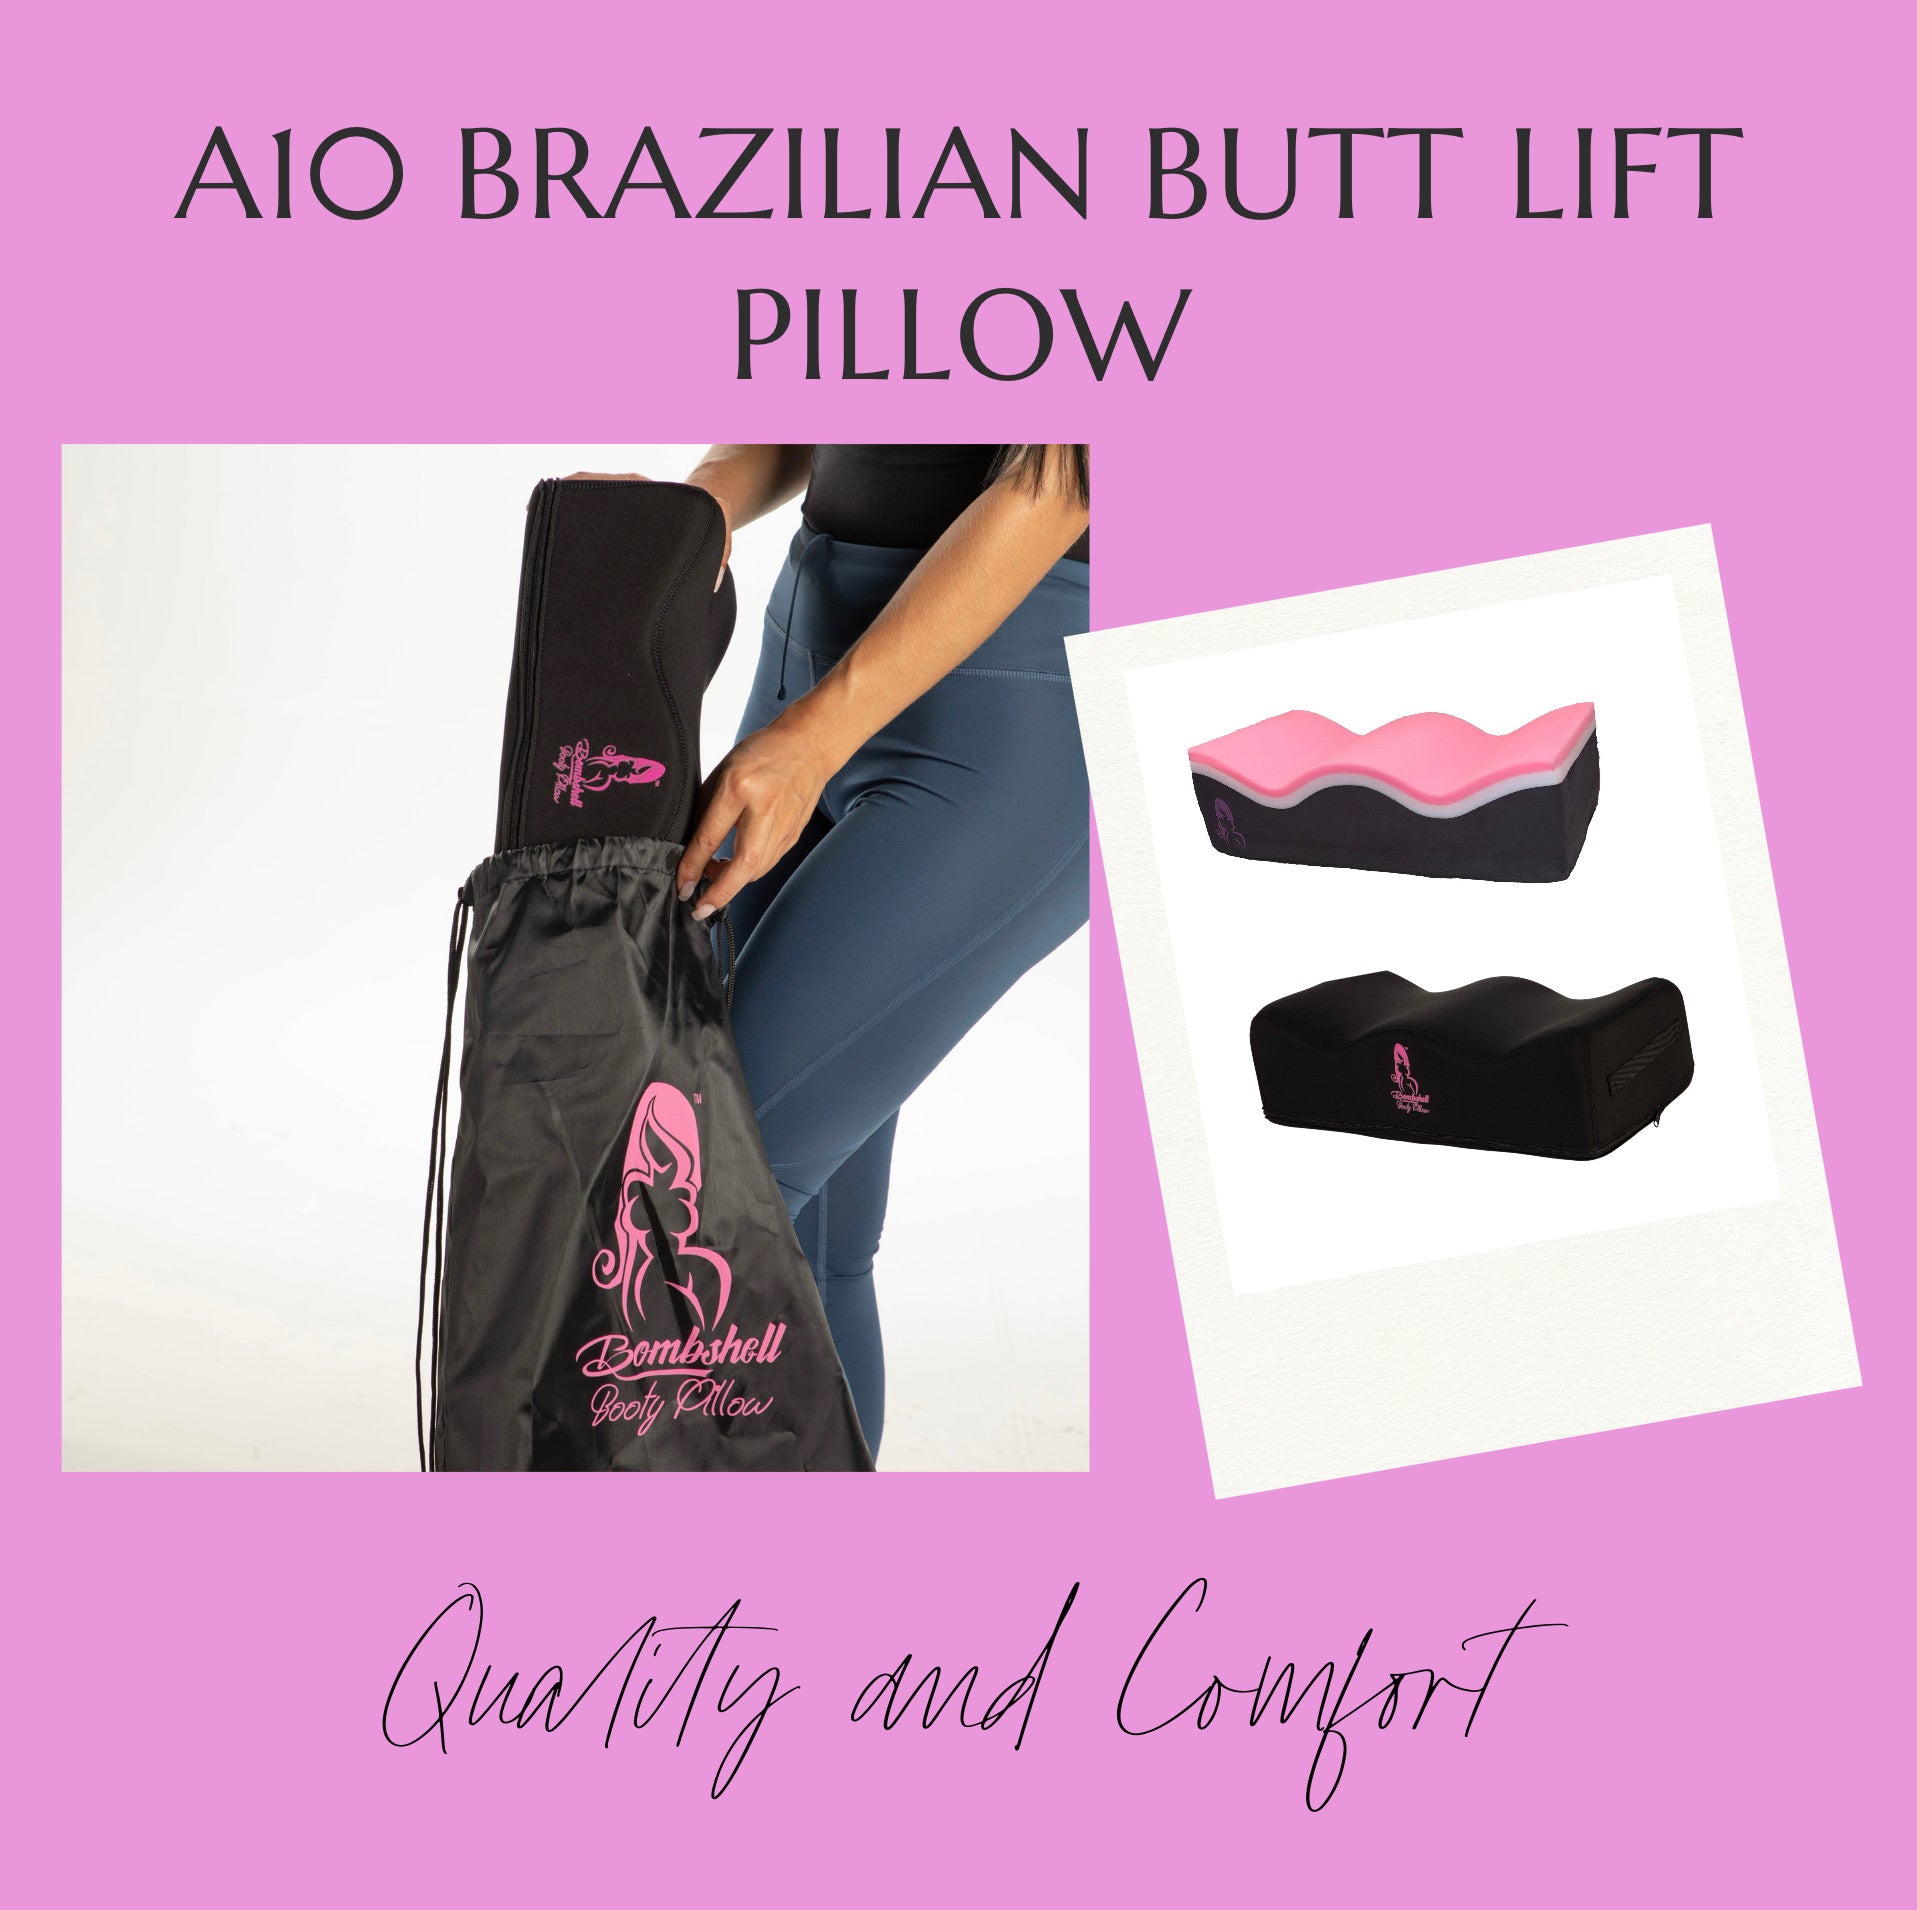 bbl pillow accommodates